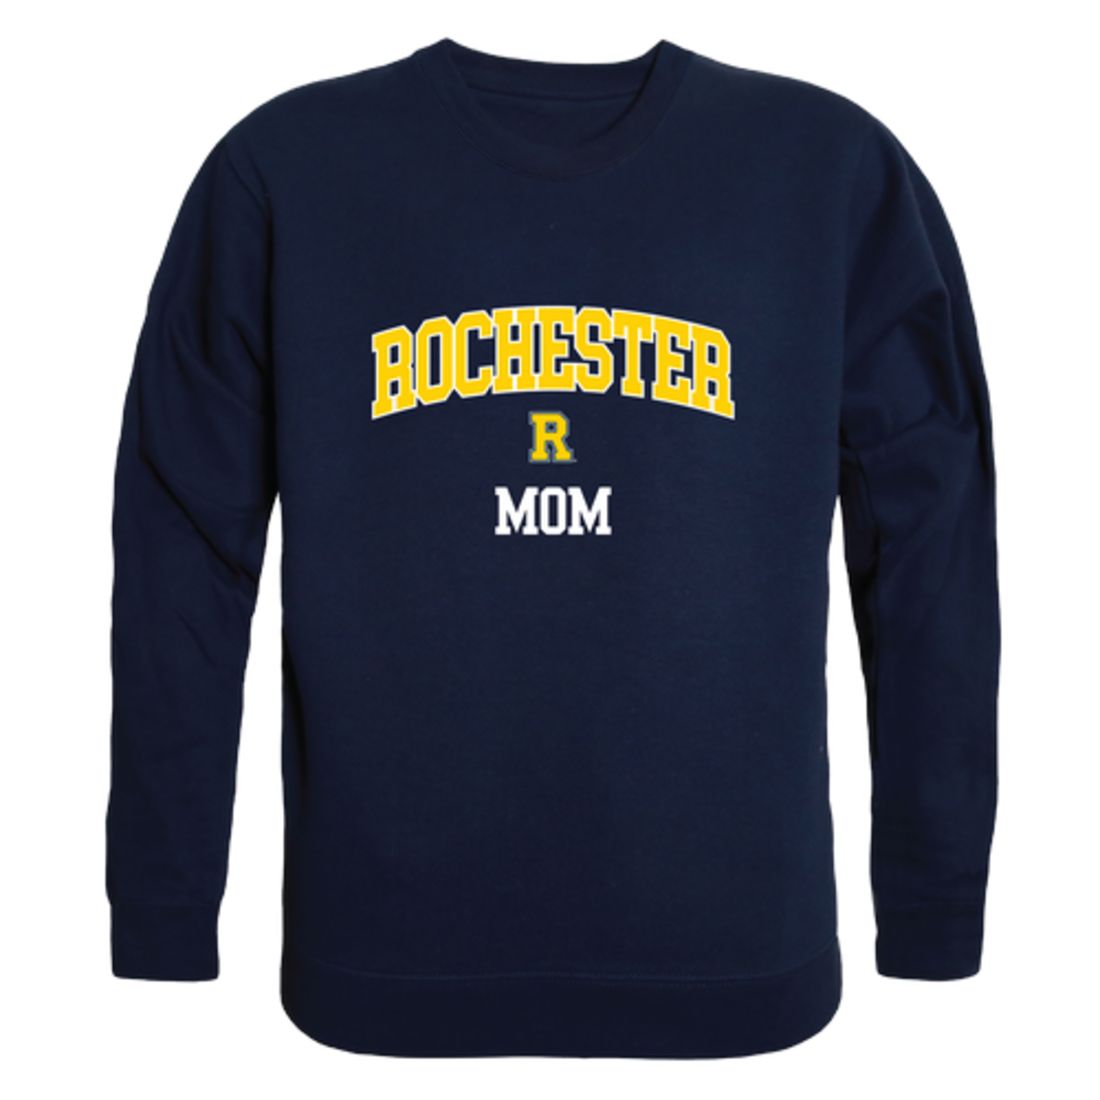 University of Rochester Yellowjackets Mom Fleece Crewneck Pullover Sweatshirt Heather Grey Small-Campus-Wardrobe